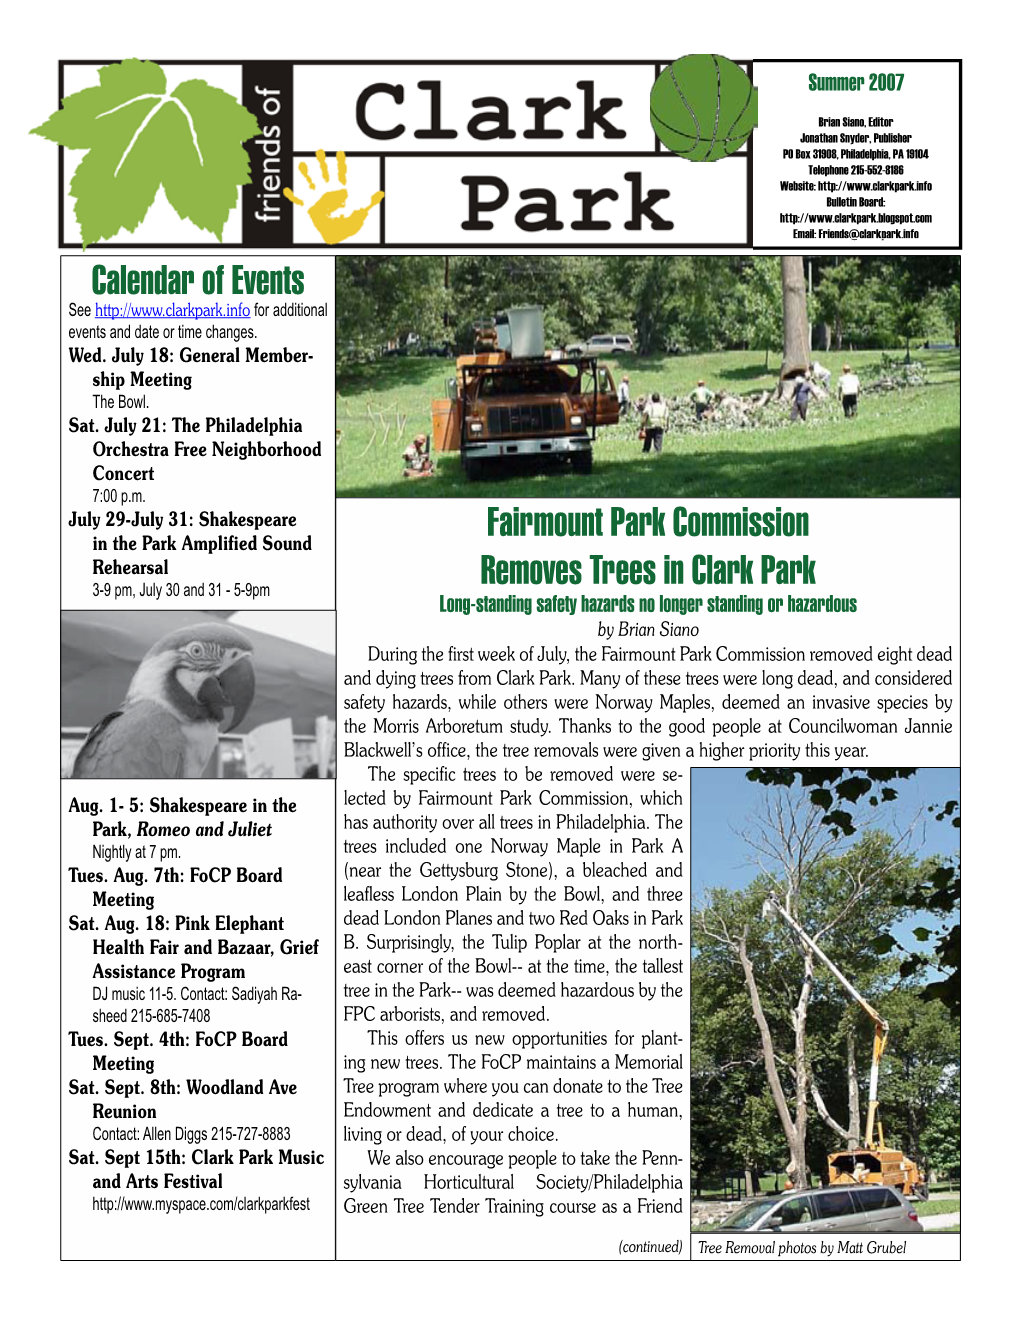 Fairmount Park Commission Removes Trees in Clark Park Calendar Of